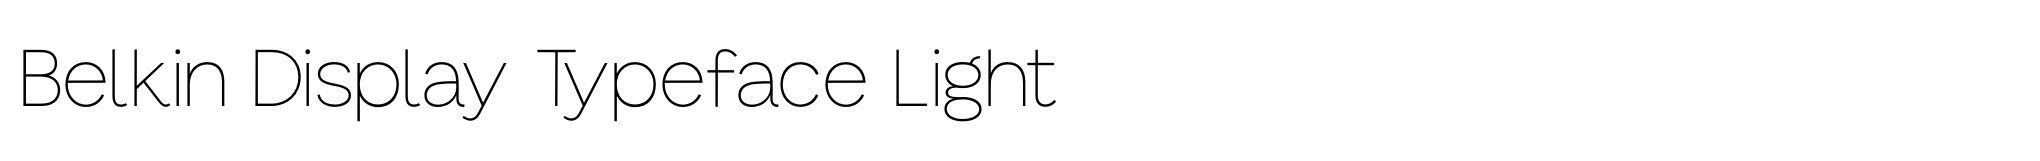 Belkin Display Typeface Light image